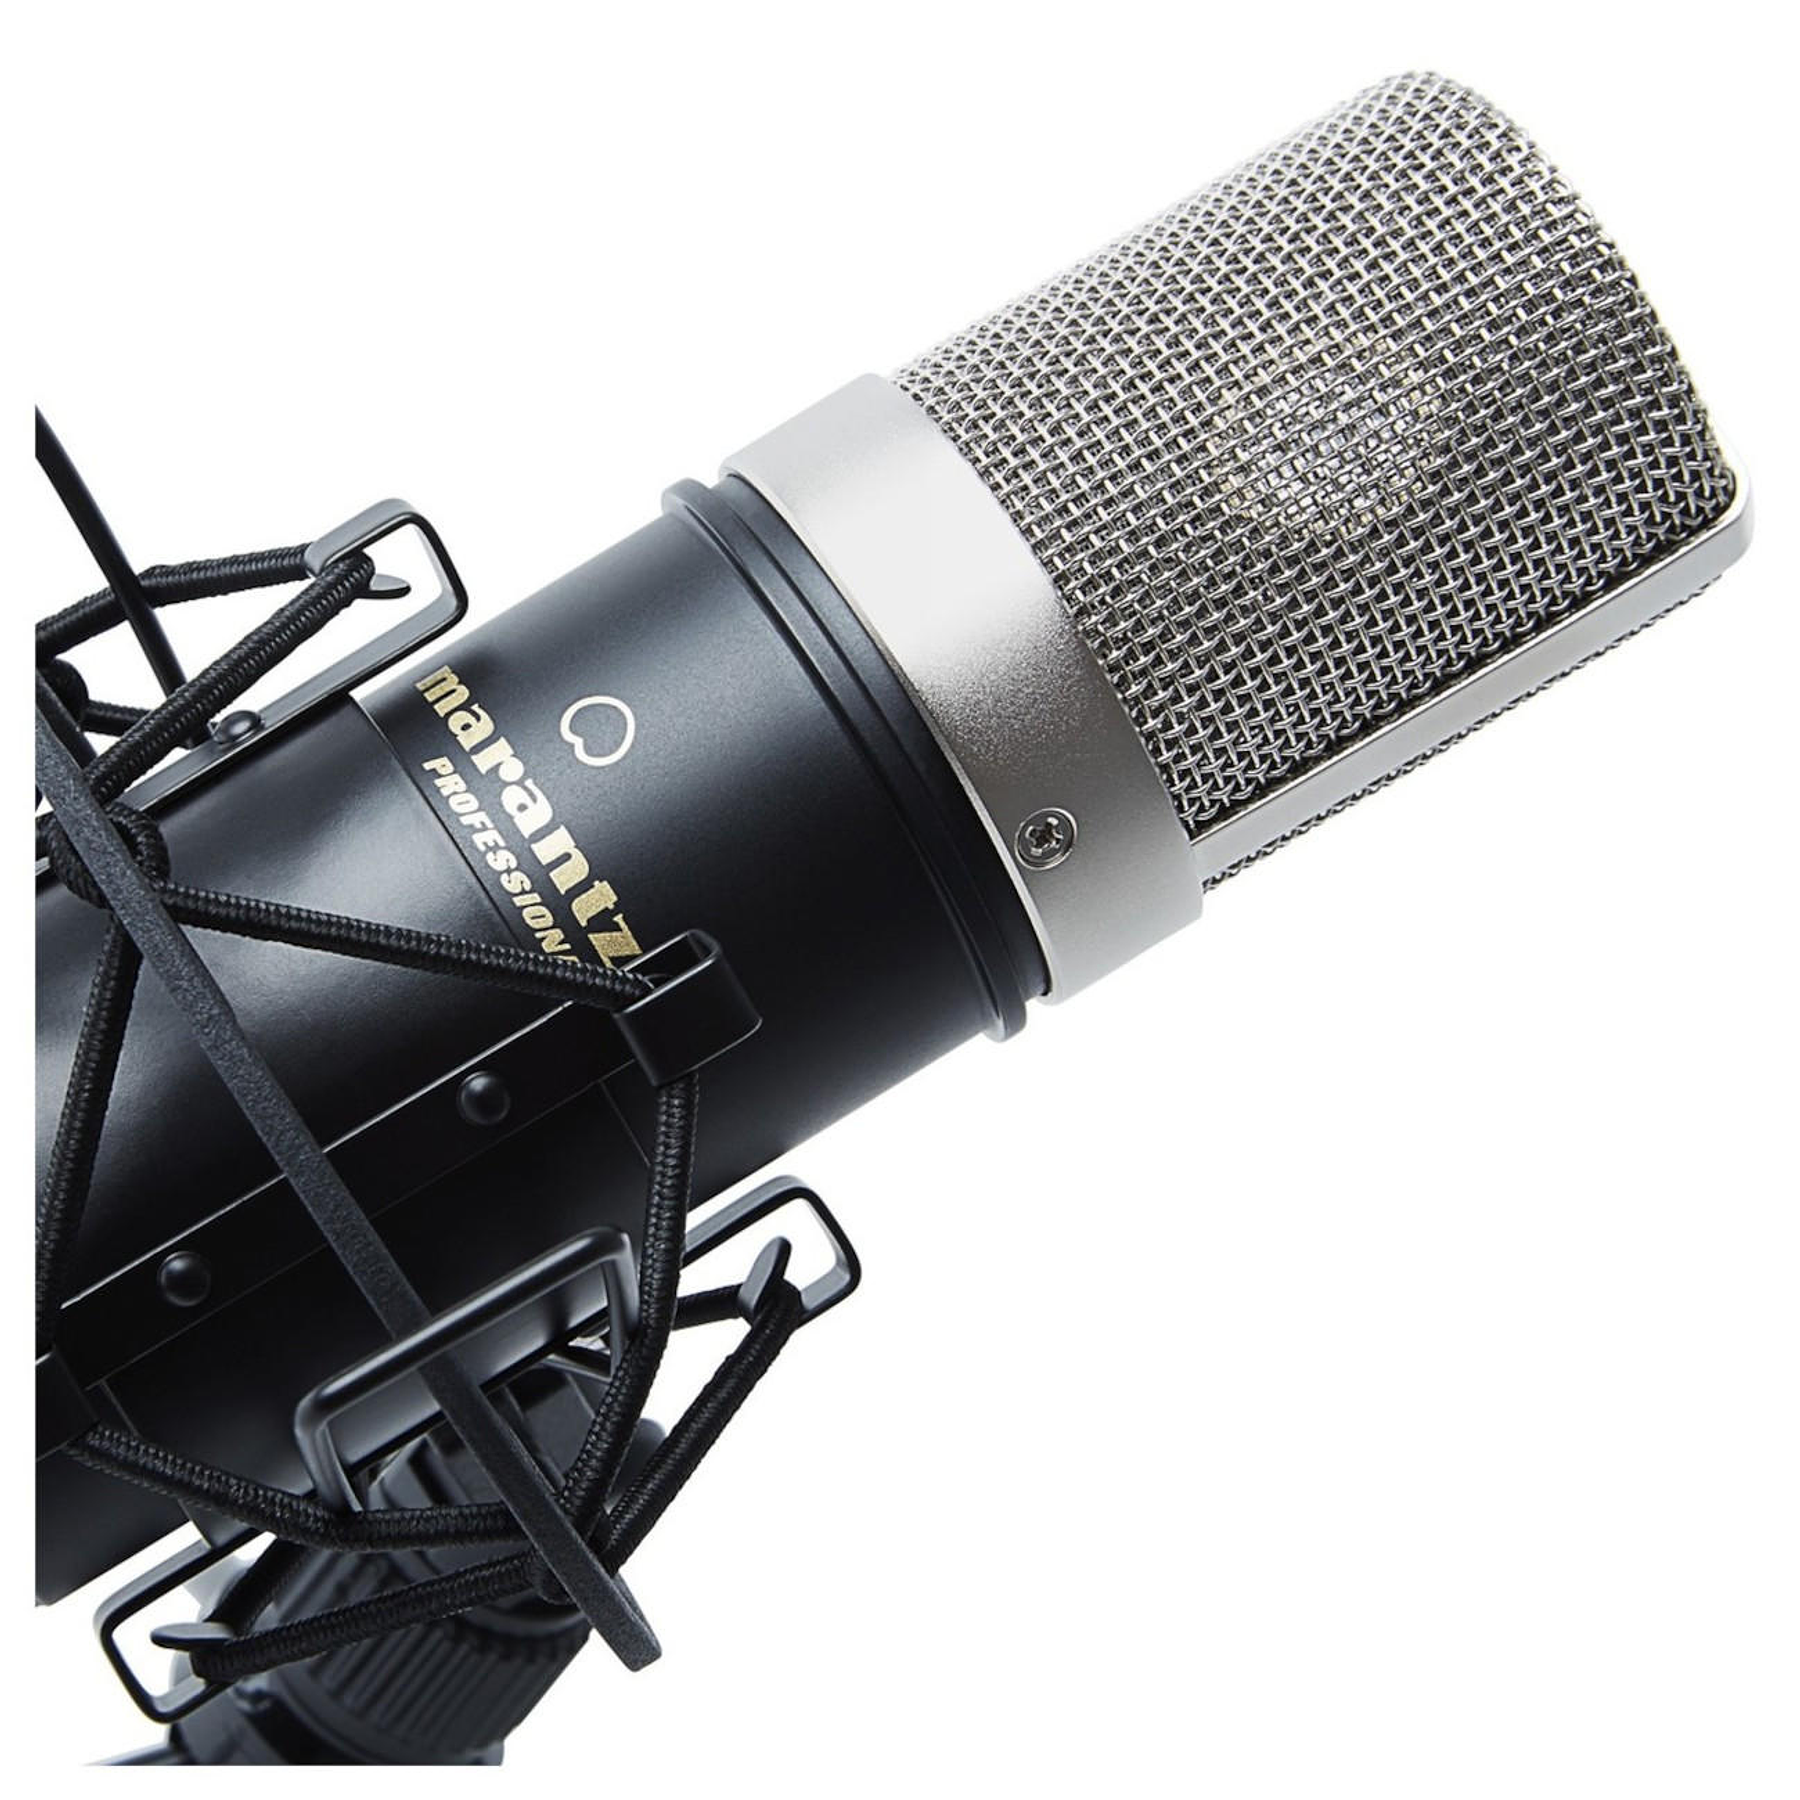 Microfono Condensador XLR Marantz MPM-1000